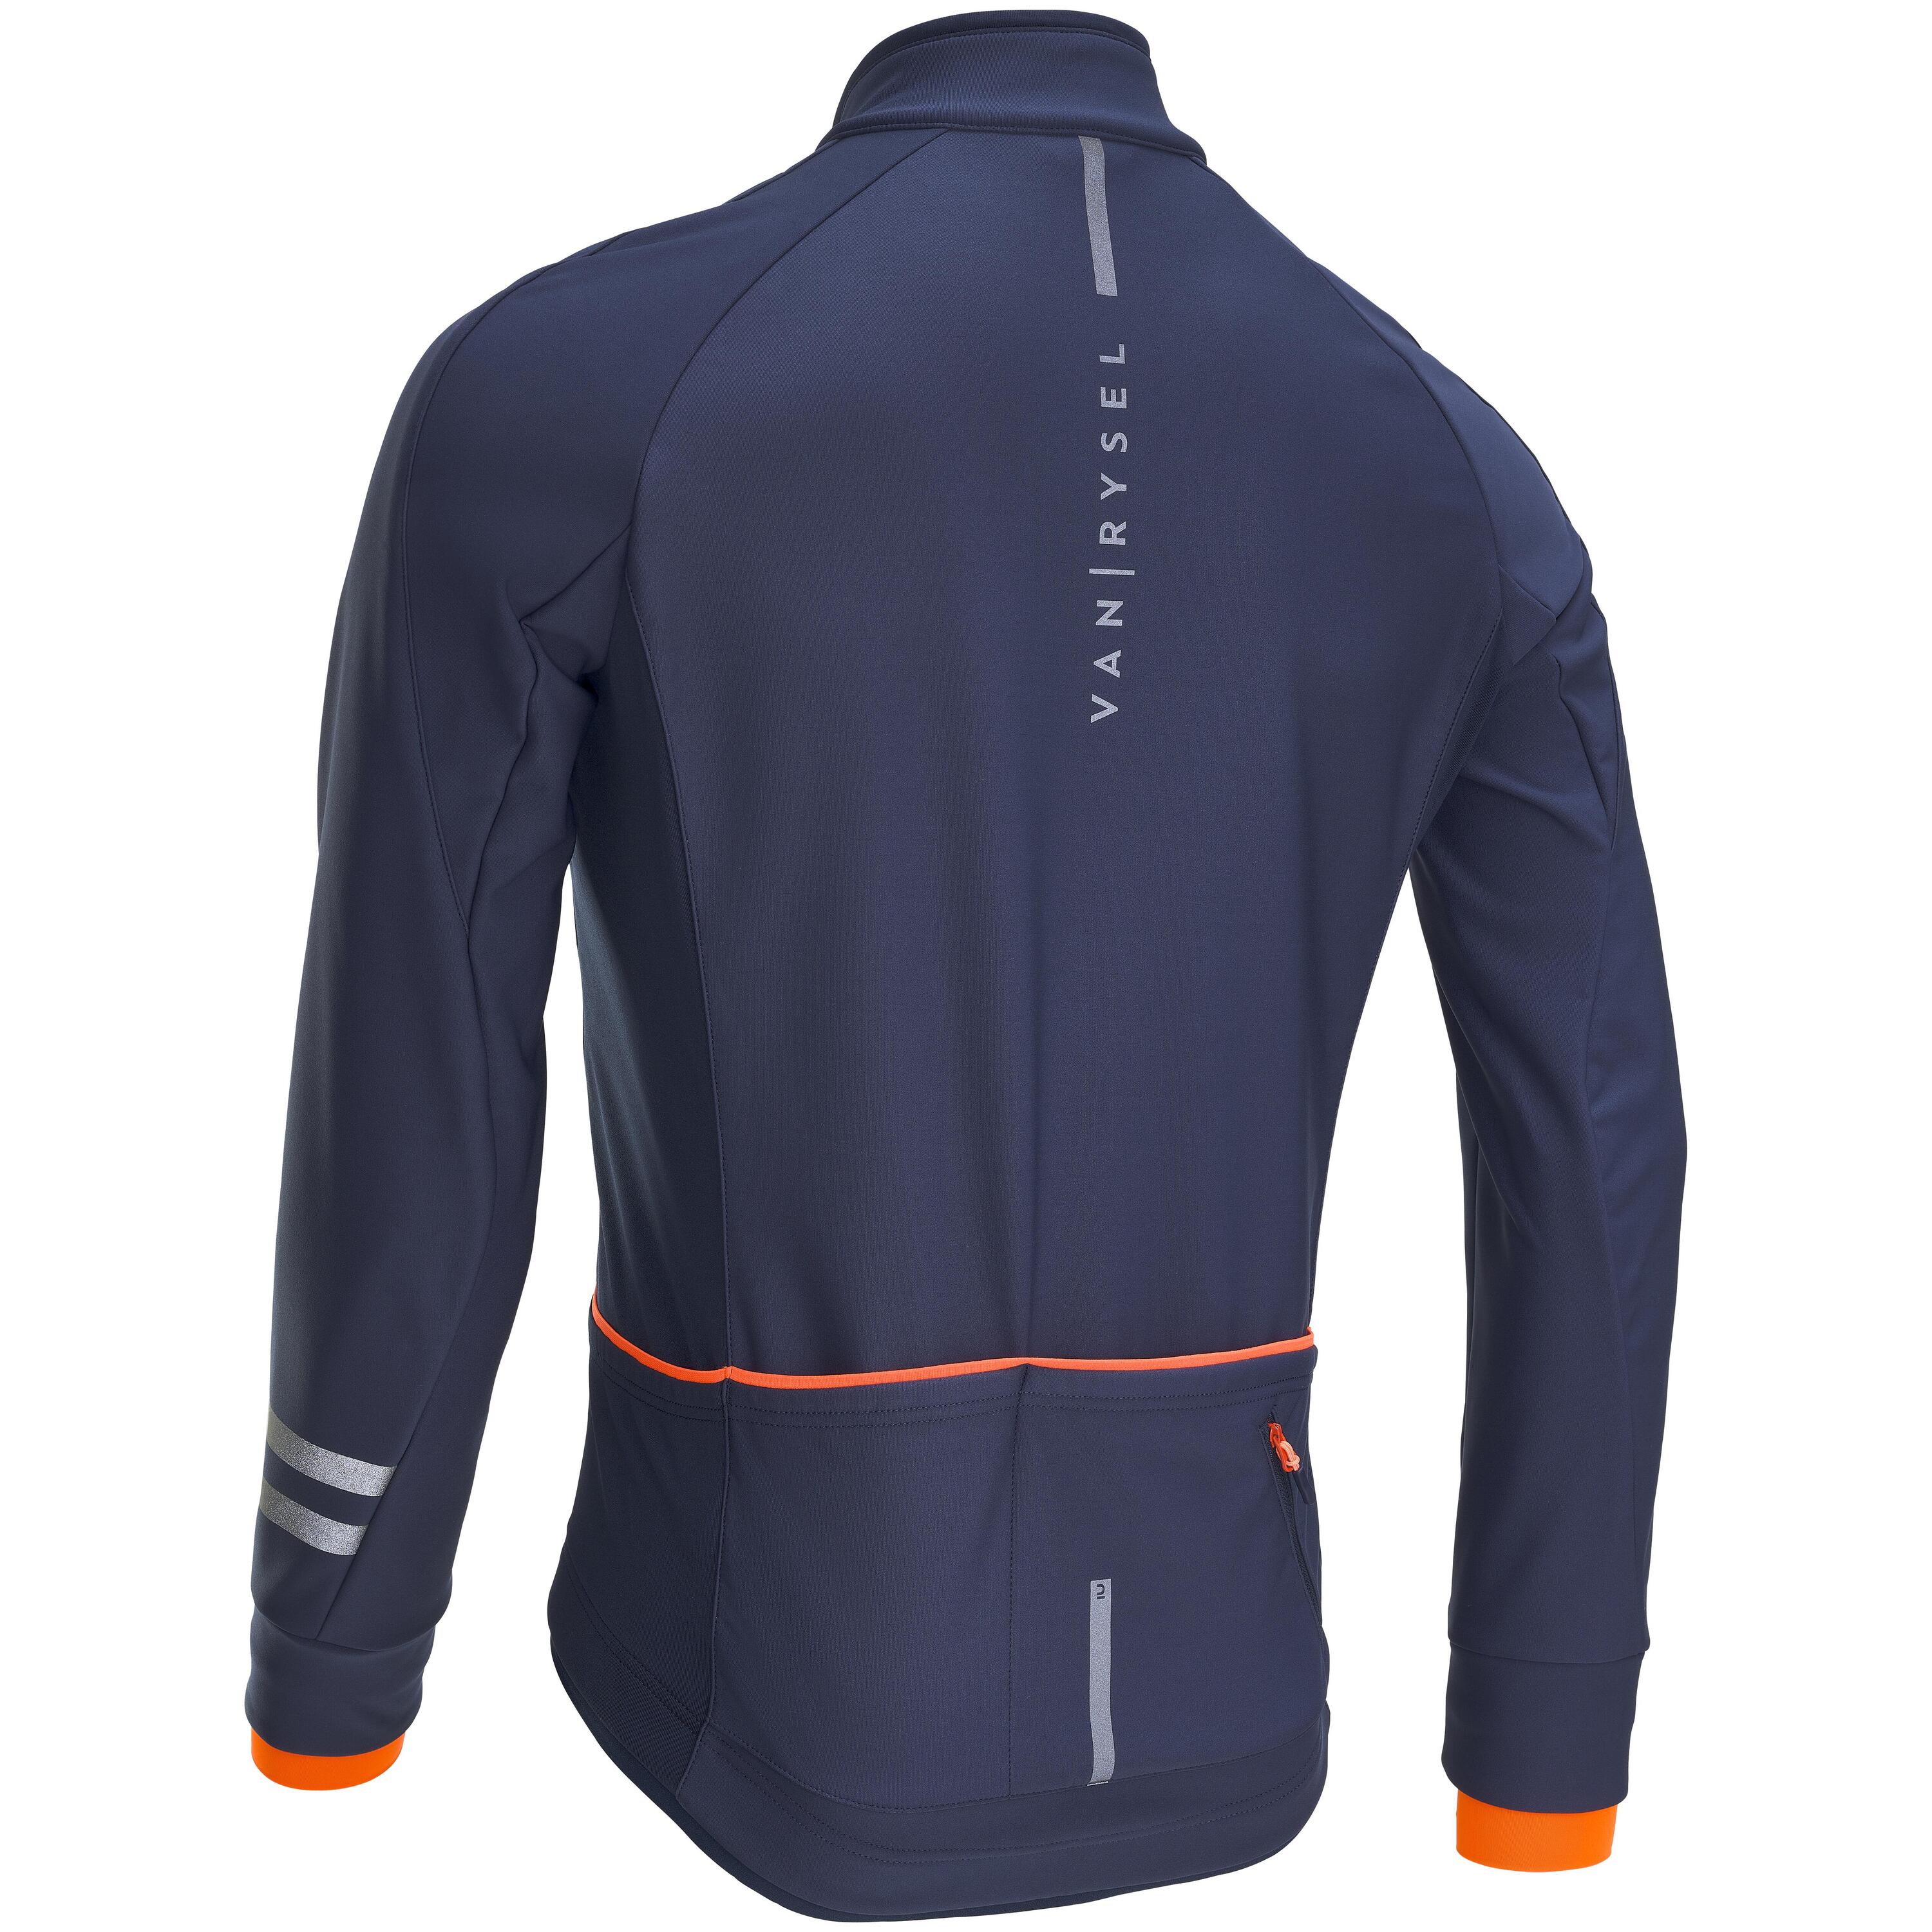 Men's Cycling Winter Jacket RC500 - Navy Blue/Orange 2/7